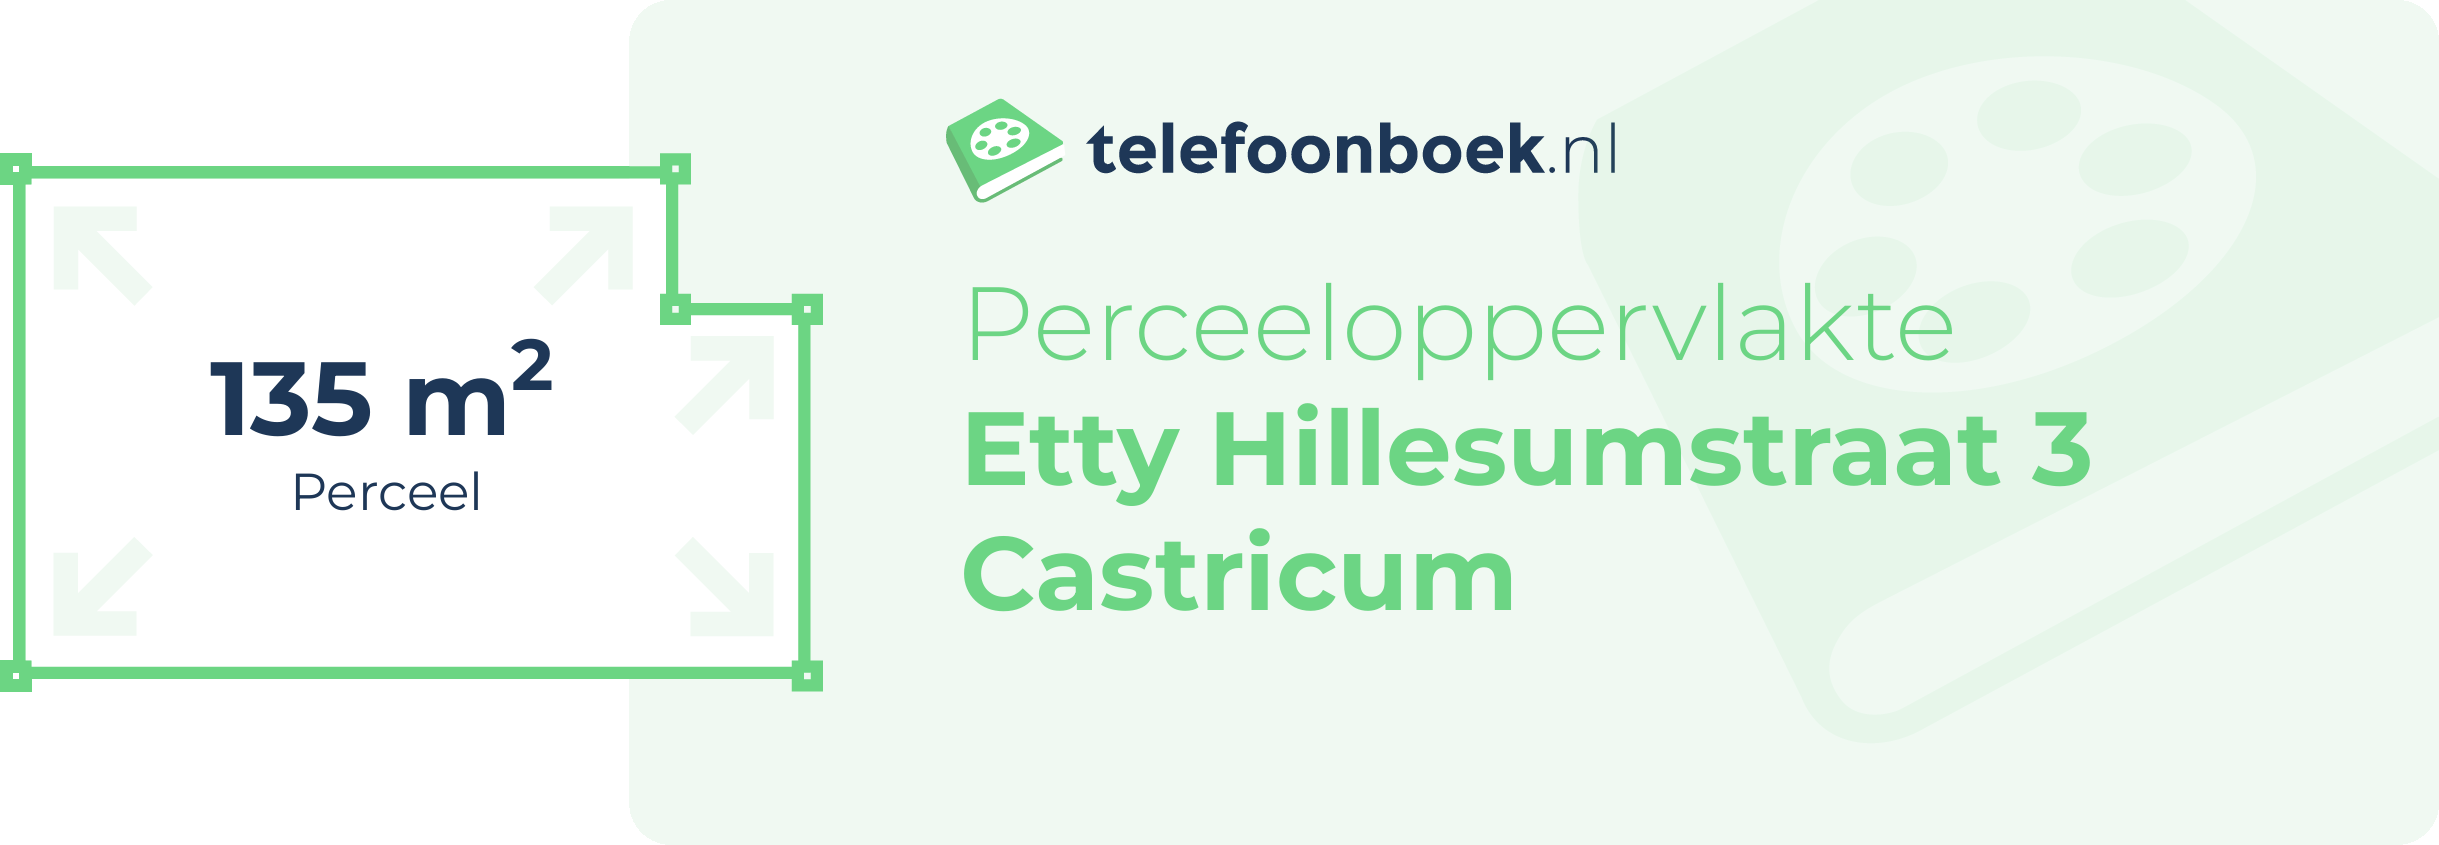 Perceeloppervlakte Etty Hillesumstraat 3 Castricum